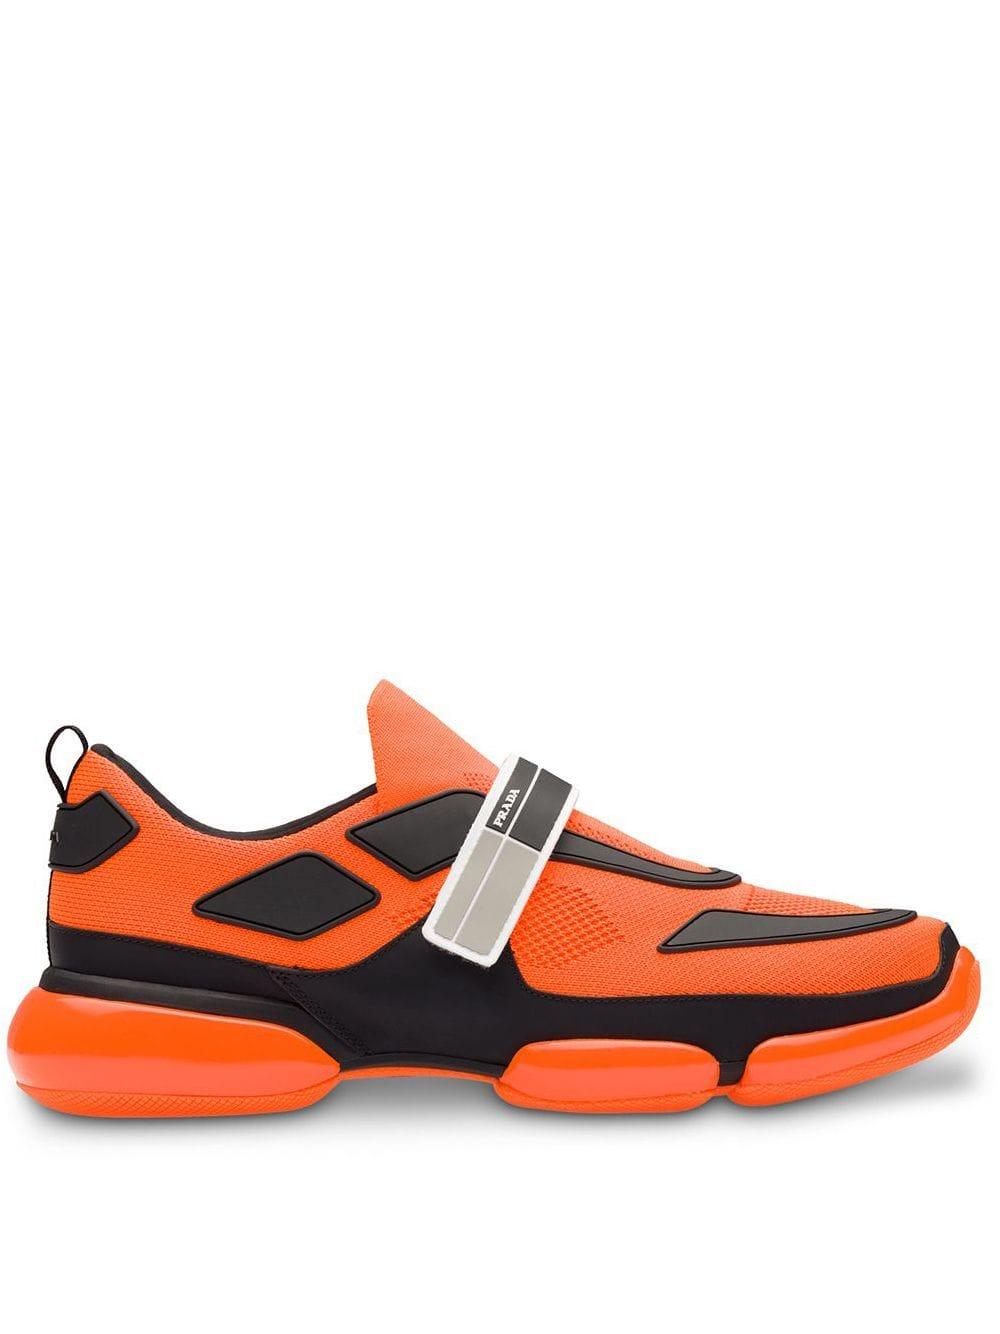 Prada Rubber Cloudbust Sneakers in Orange for Men - Lyst